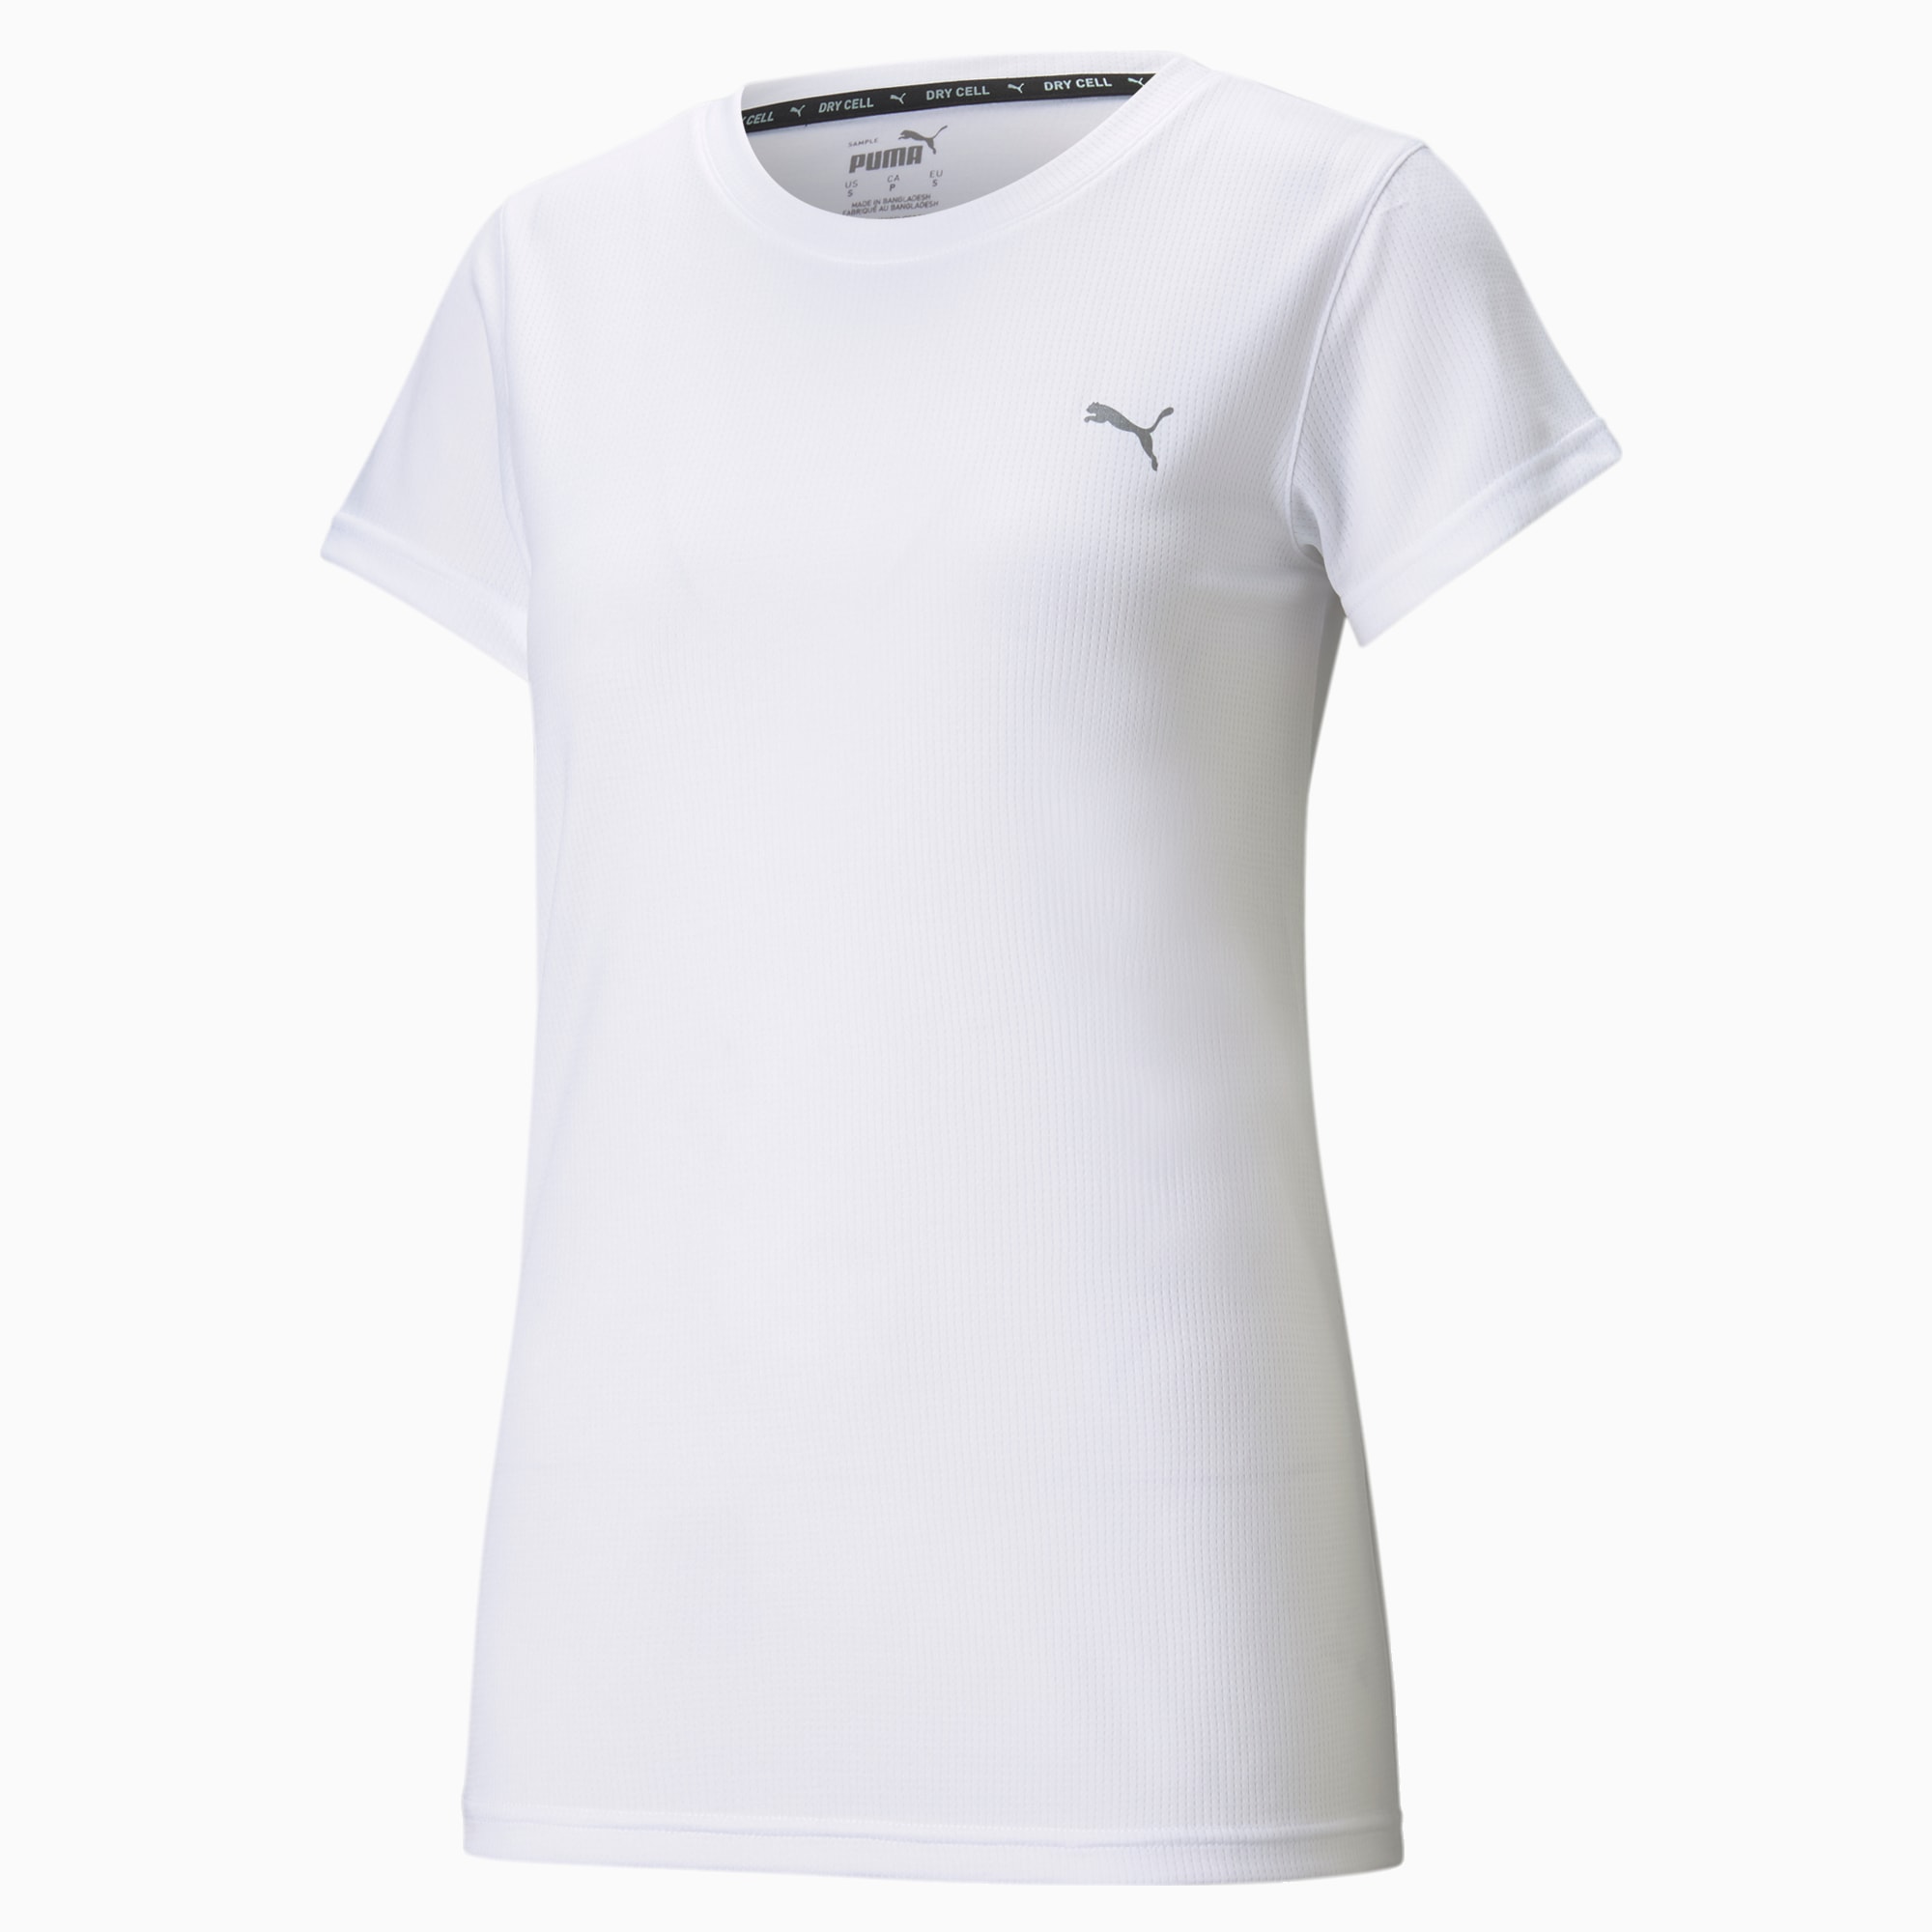 PUMA Performance Women's Training T-Shirt, White, Size S, Clothing